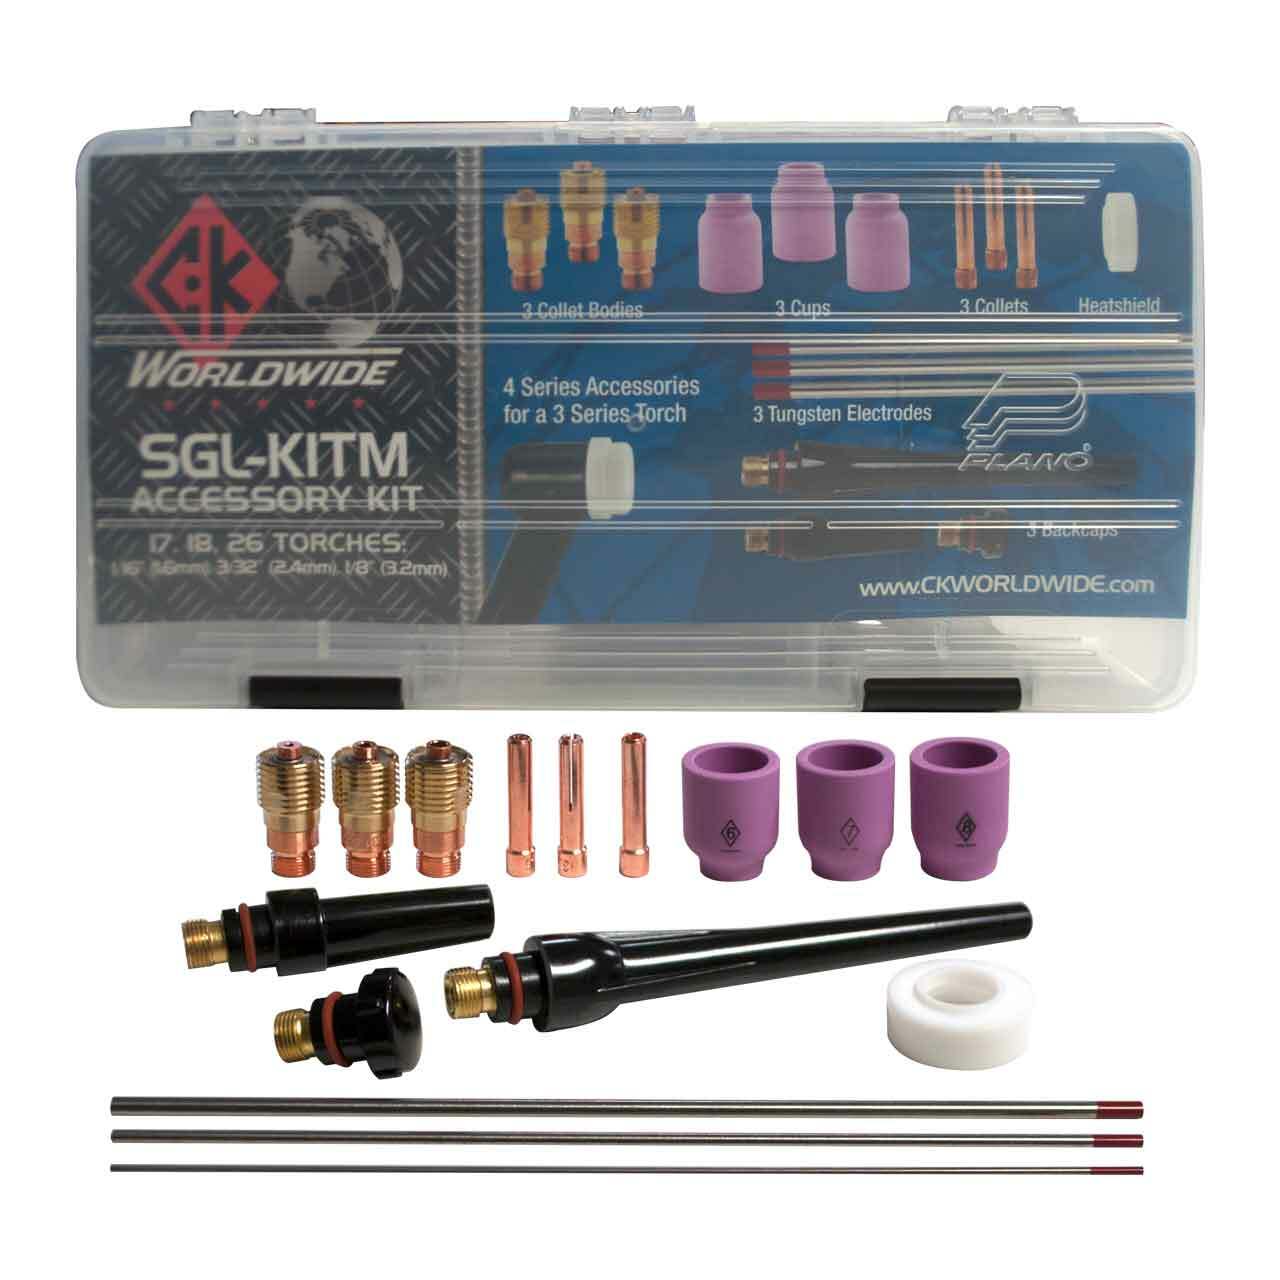 CK Worldwide SGL-KITM 17/18/26 Series High Amperage Stubby Gas Lens Accessory Kit